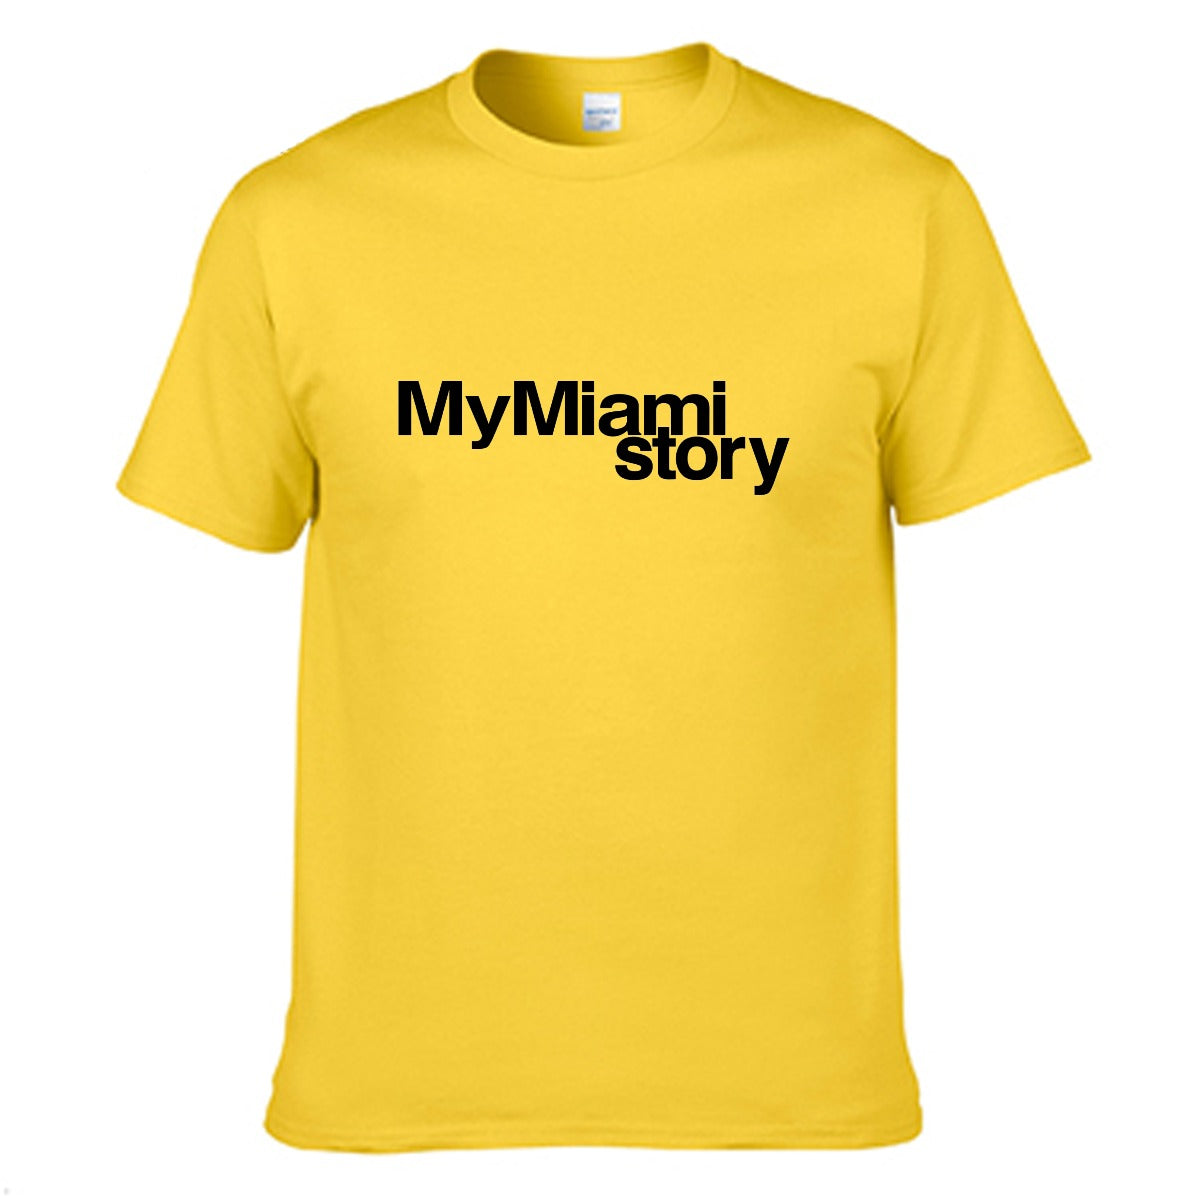 My Miami Story Men's T-shirt (100% Cotton) - T0354